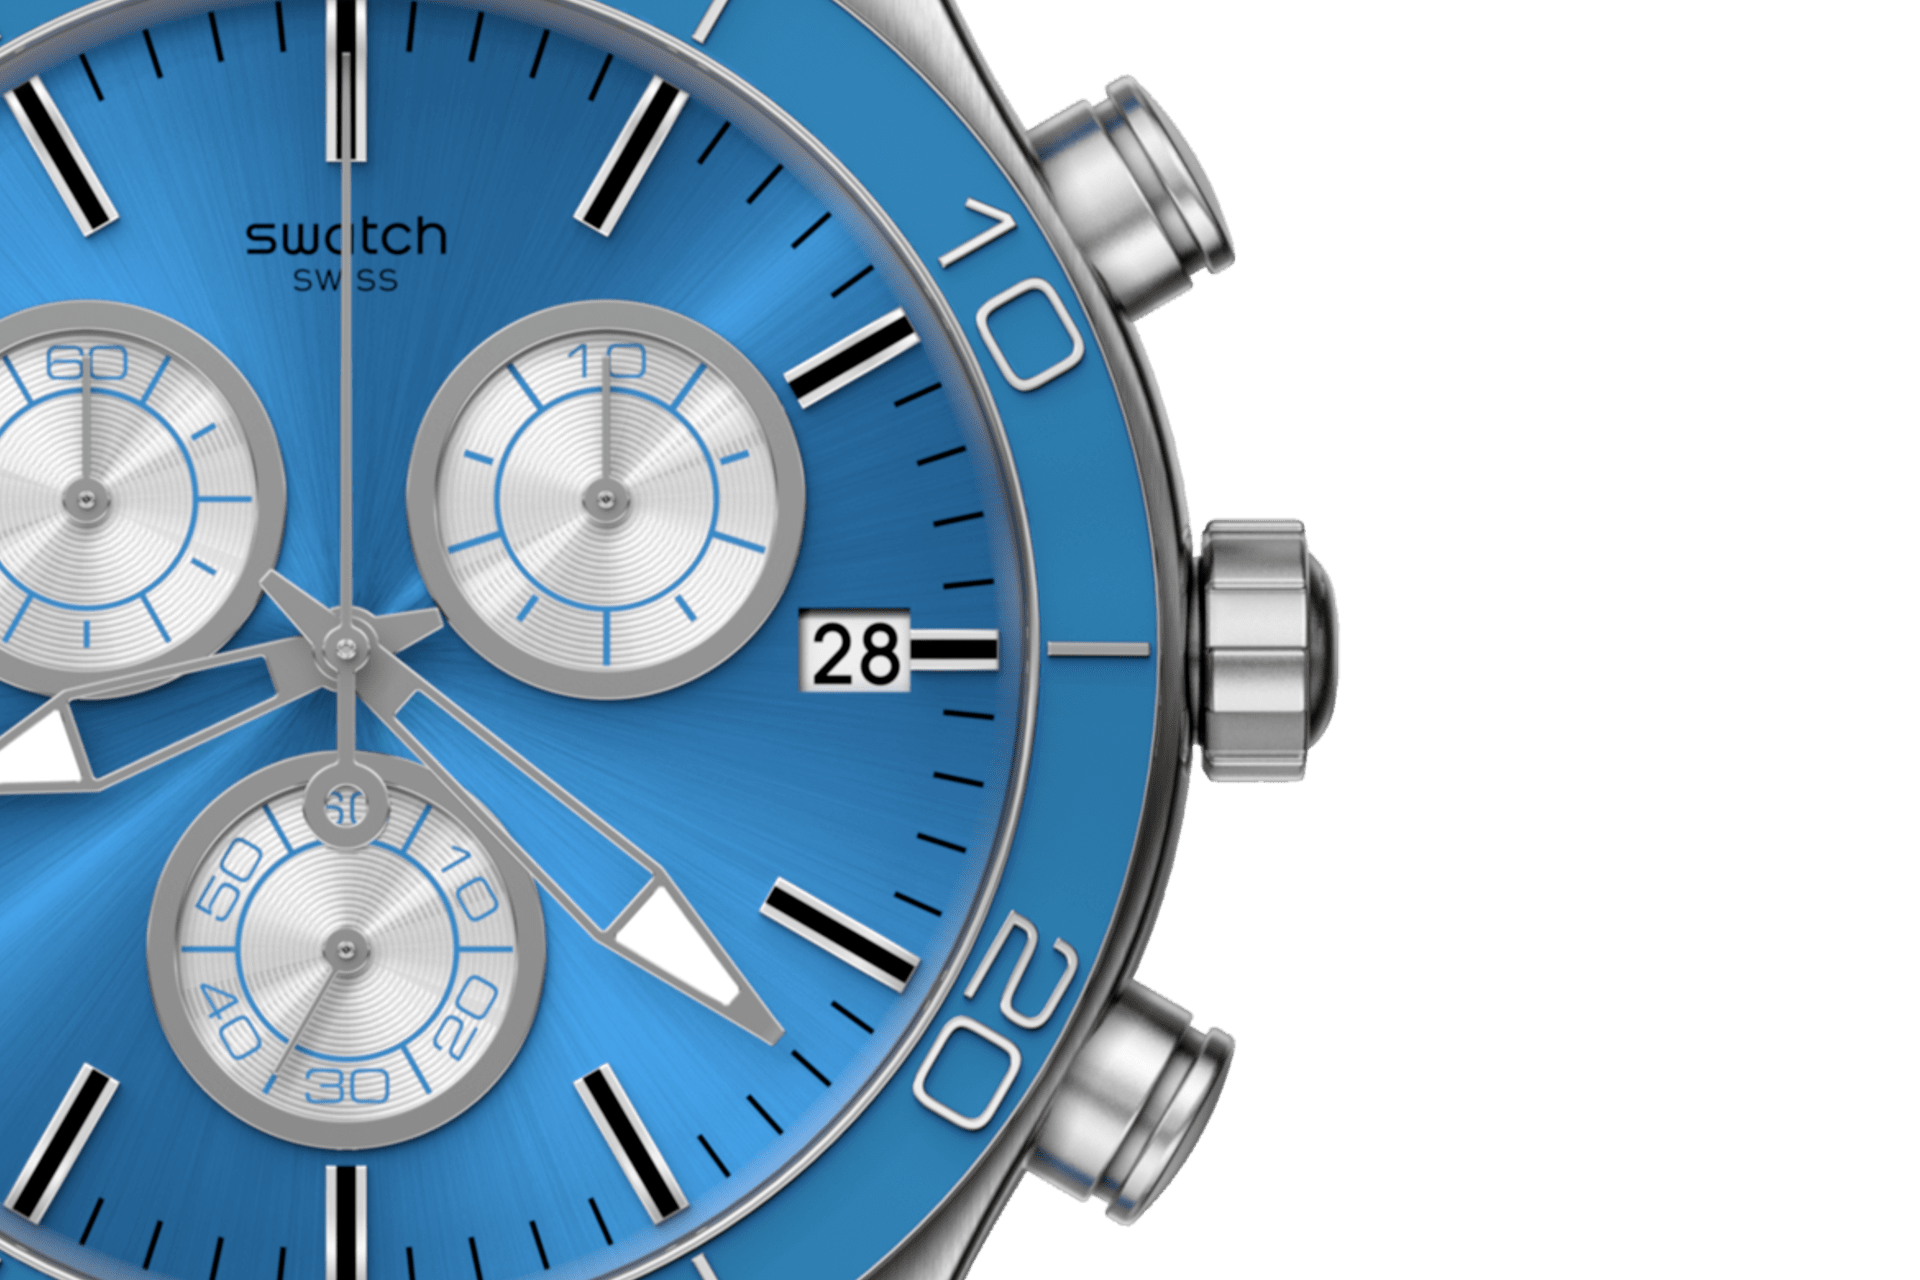 Swatch Reloj de Cuarzo Unisex Chemical Blue 45 mm : : Moda